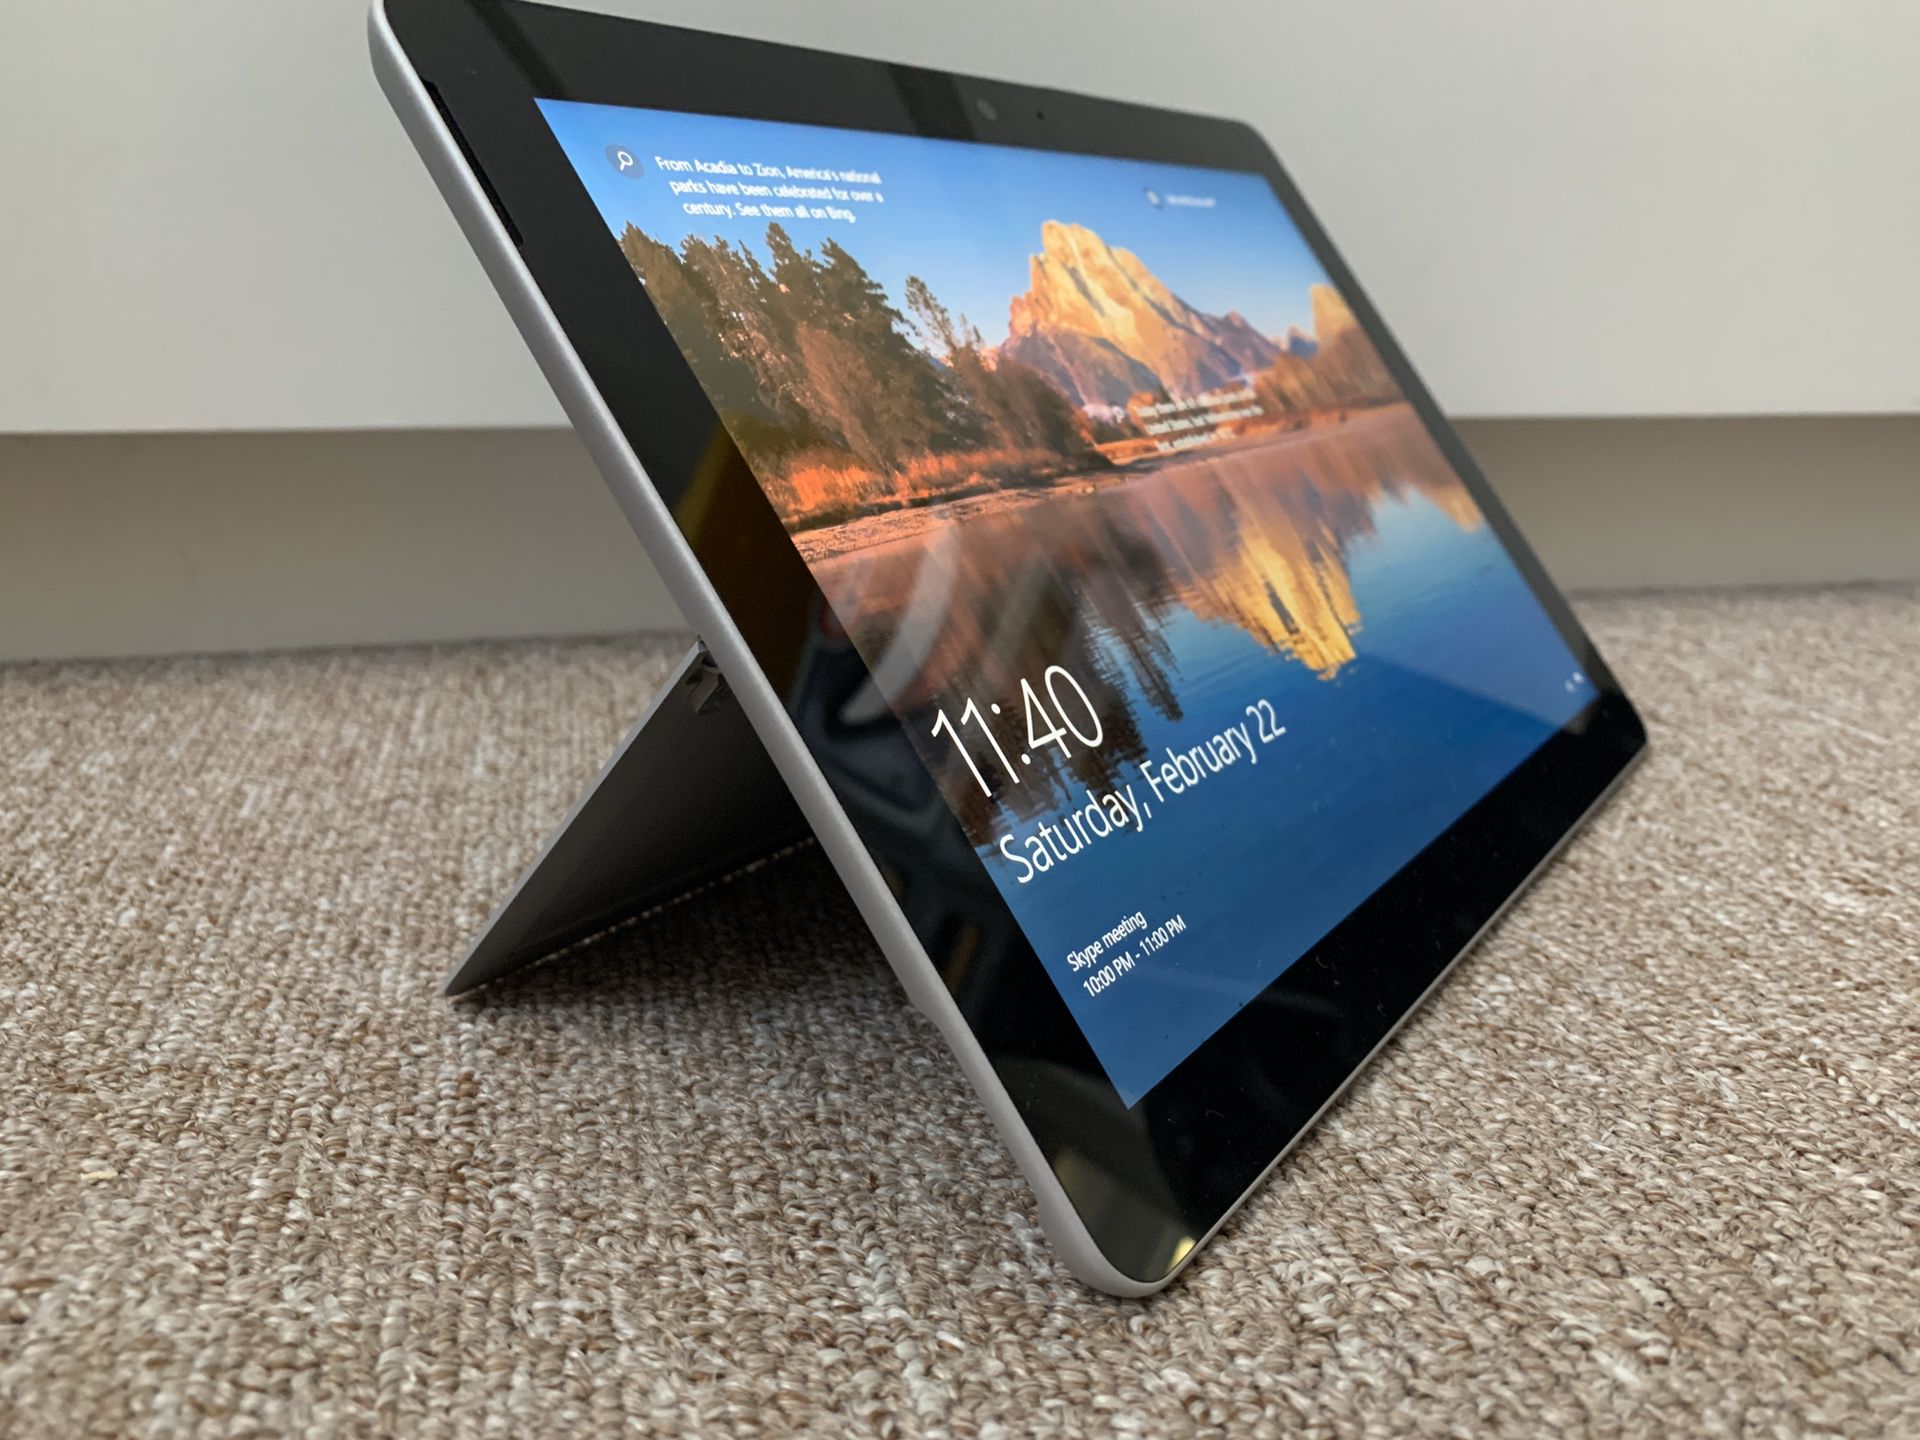 Microsoft Surface Go 64GB Model 1824